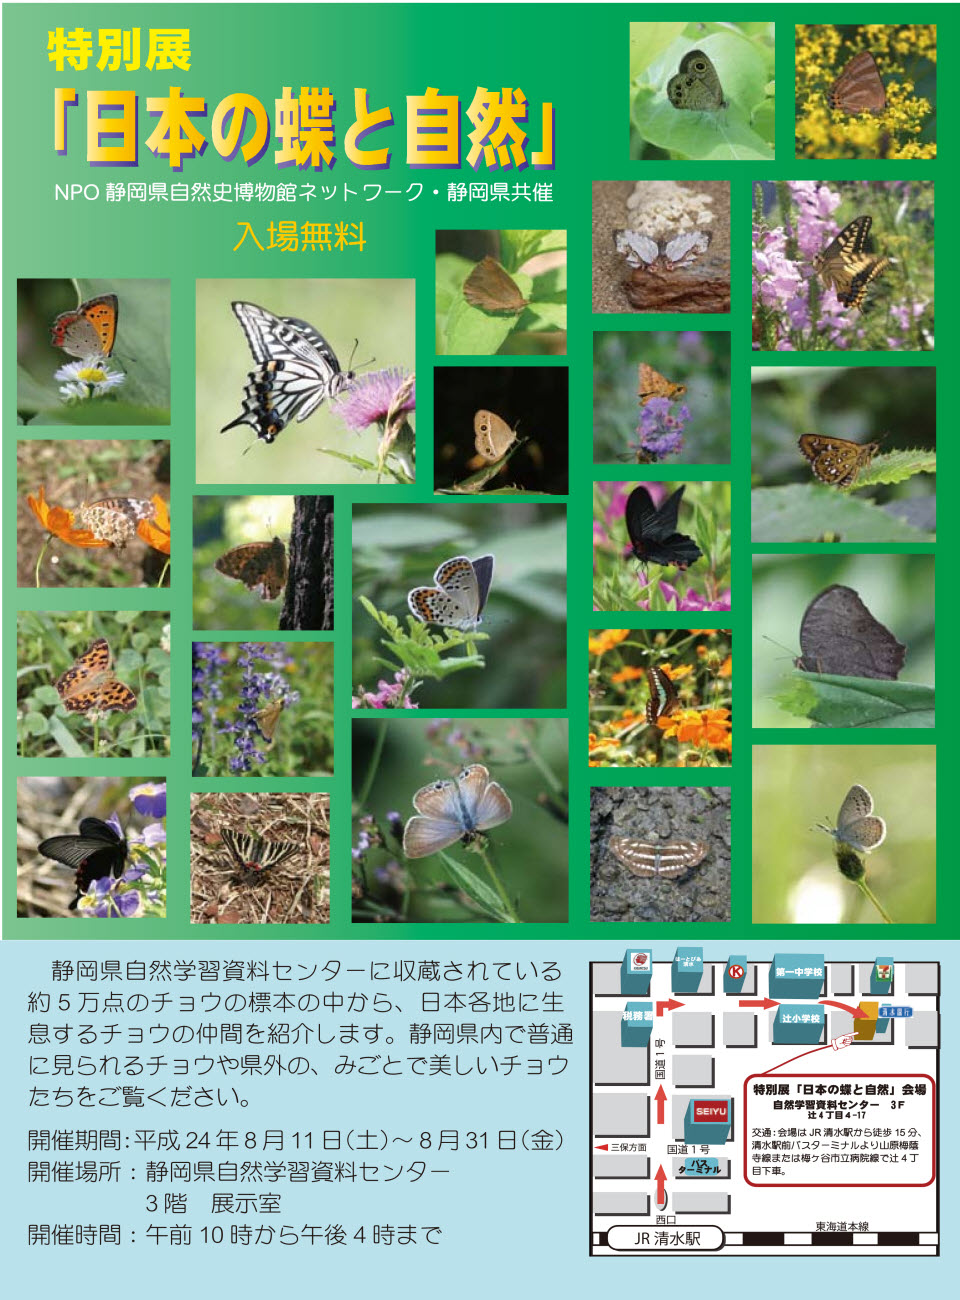 http://www.shizutan.jp/learning/2012/08/03/images/1208ex.jpg